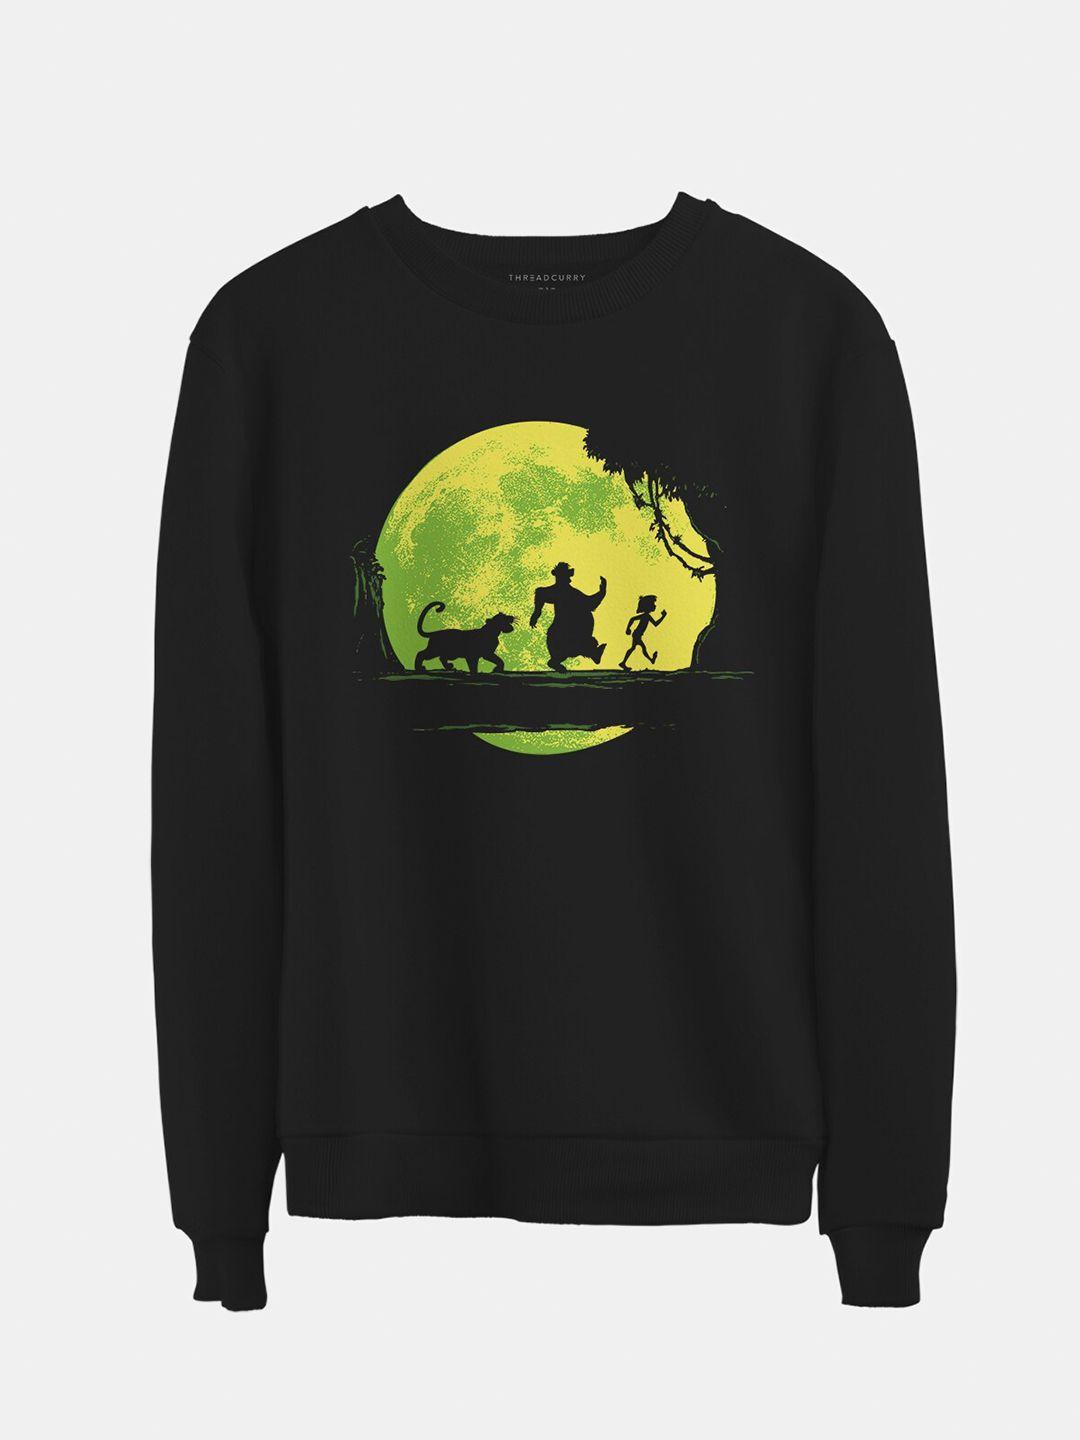 threadcurry unisex kids black printed sweatshirt